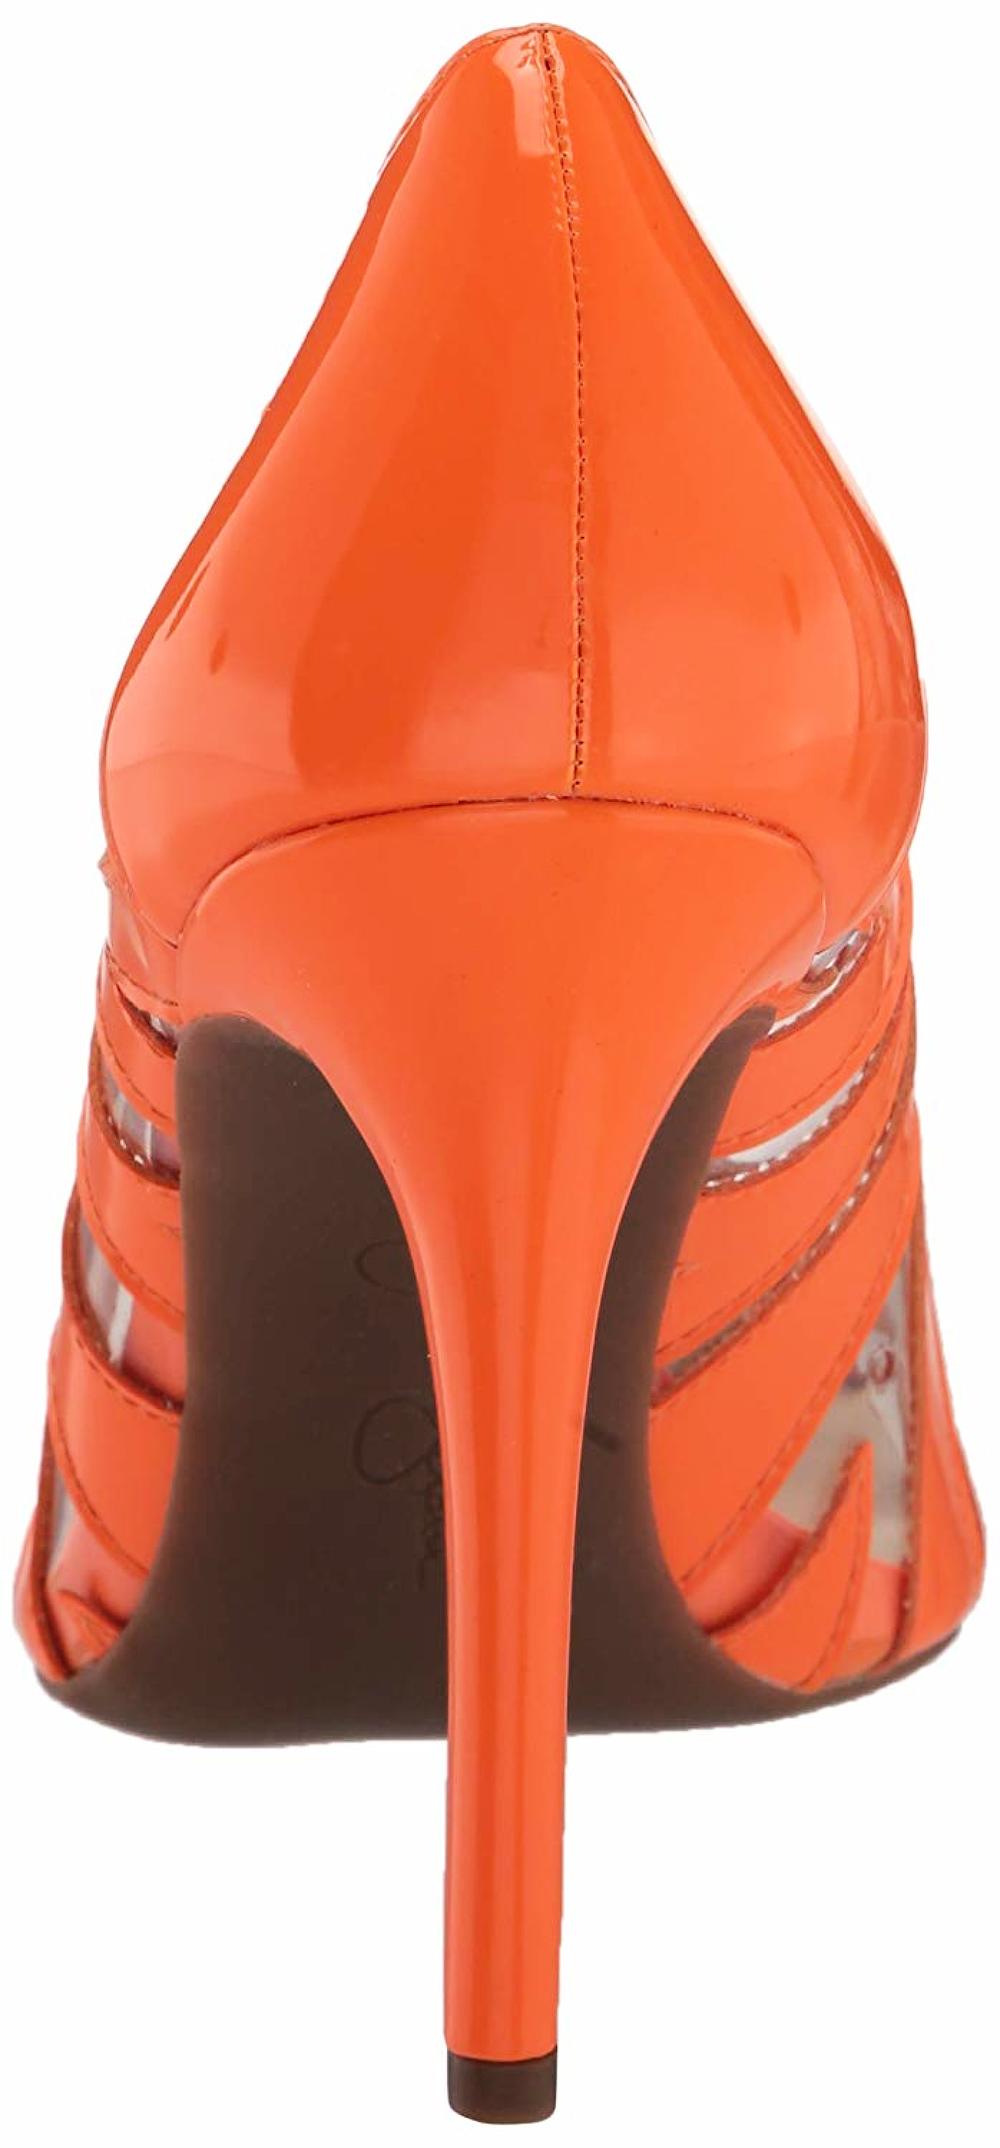 Jessica Simpson PALMRA Pump Neon Orange Clear Pointed Toe Stiletto Pumps - image 2 of 5